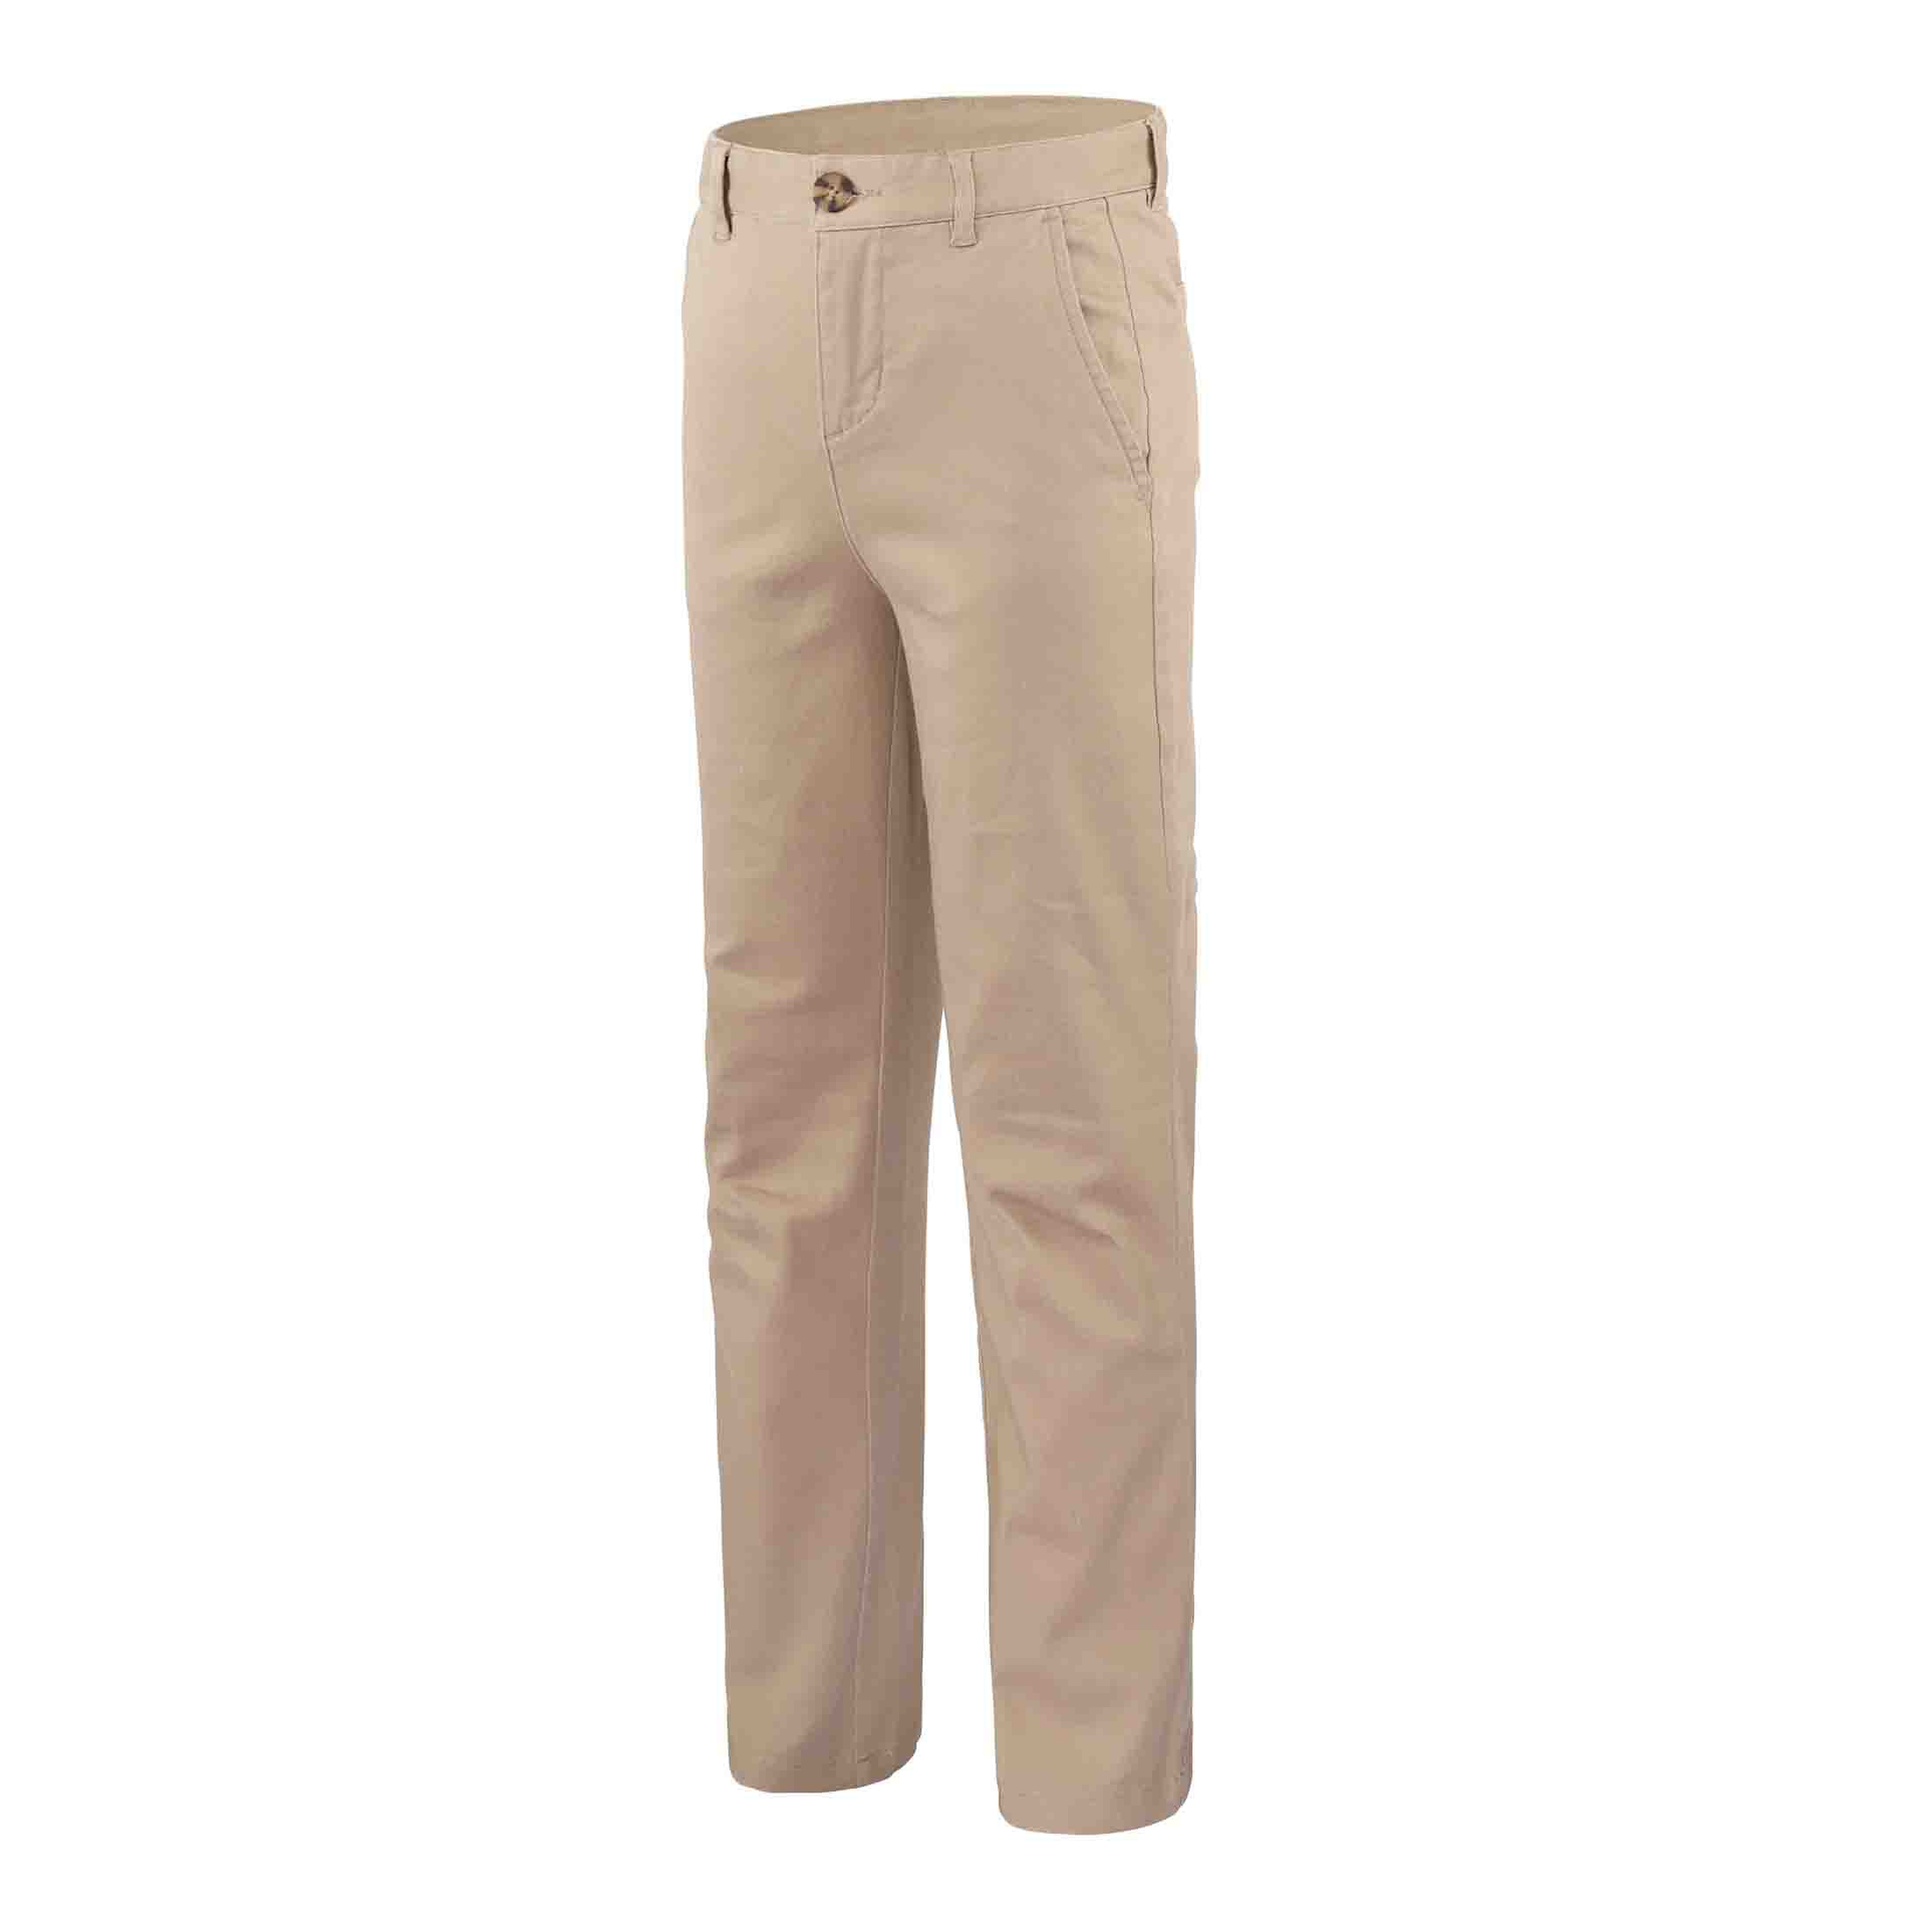 Bienzoe Boy's Cotton Stretchy Adjustable Waist School Uniforms Pants 